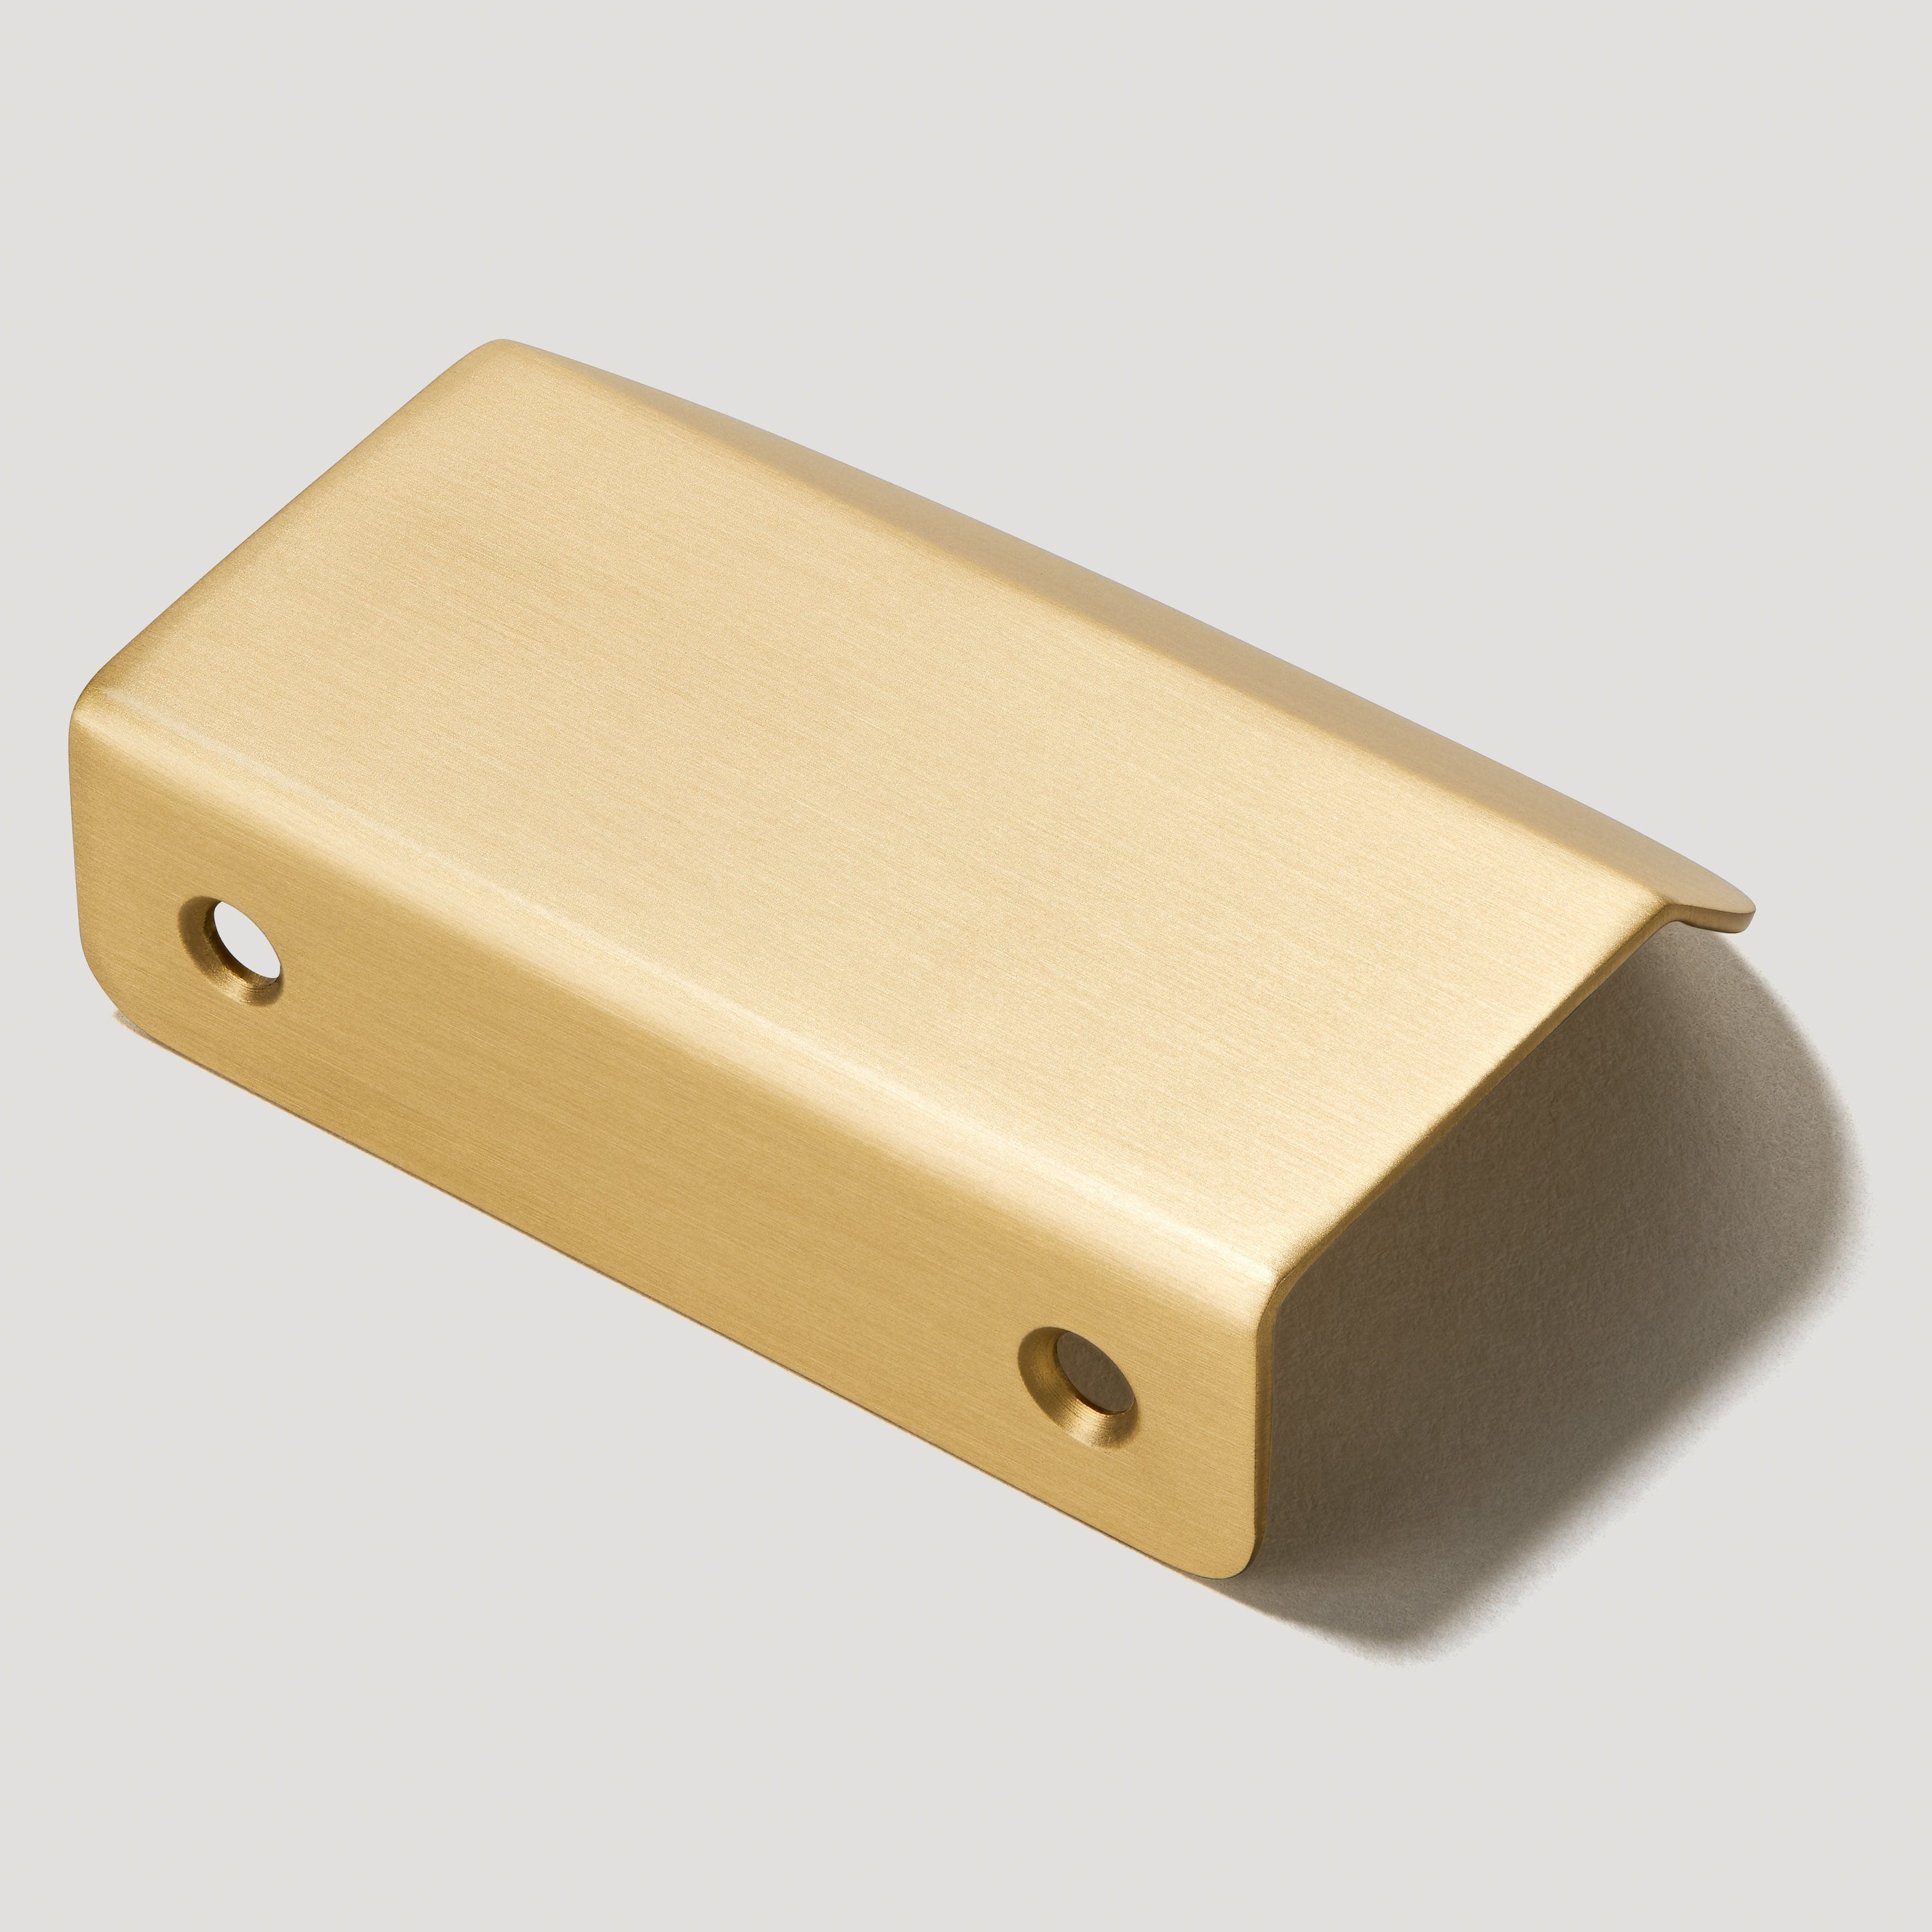 Plank Hardware 2.76'' (1.97'' CC) FOLD Short Edge Pull - Brass